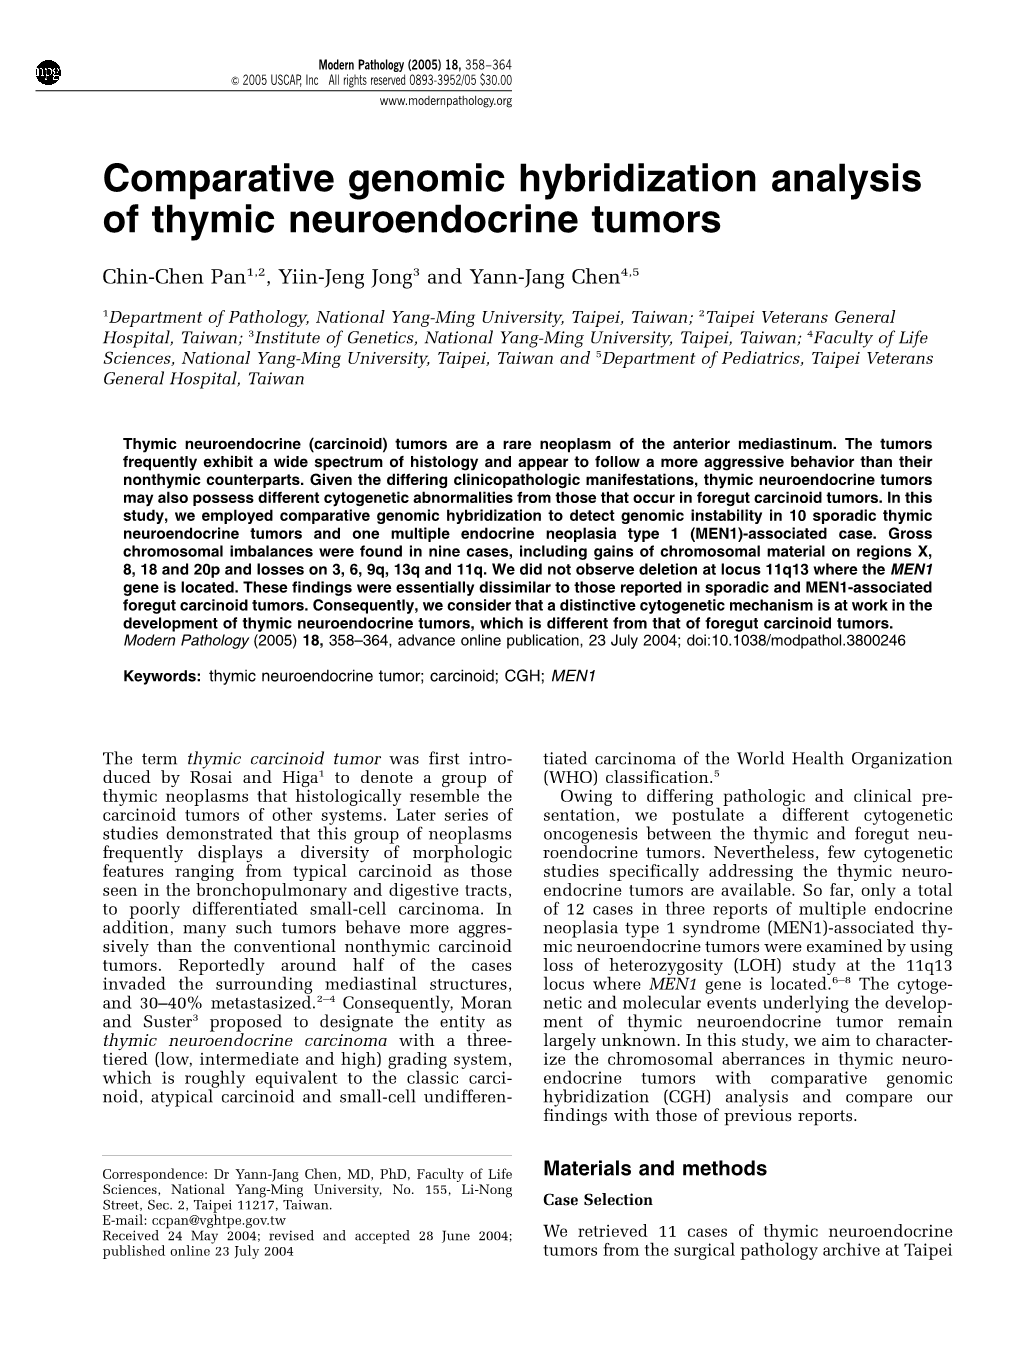 Comparative Genomic Hybridization Analysis of Thymic Neuroendocrine Tumors